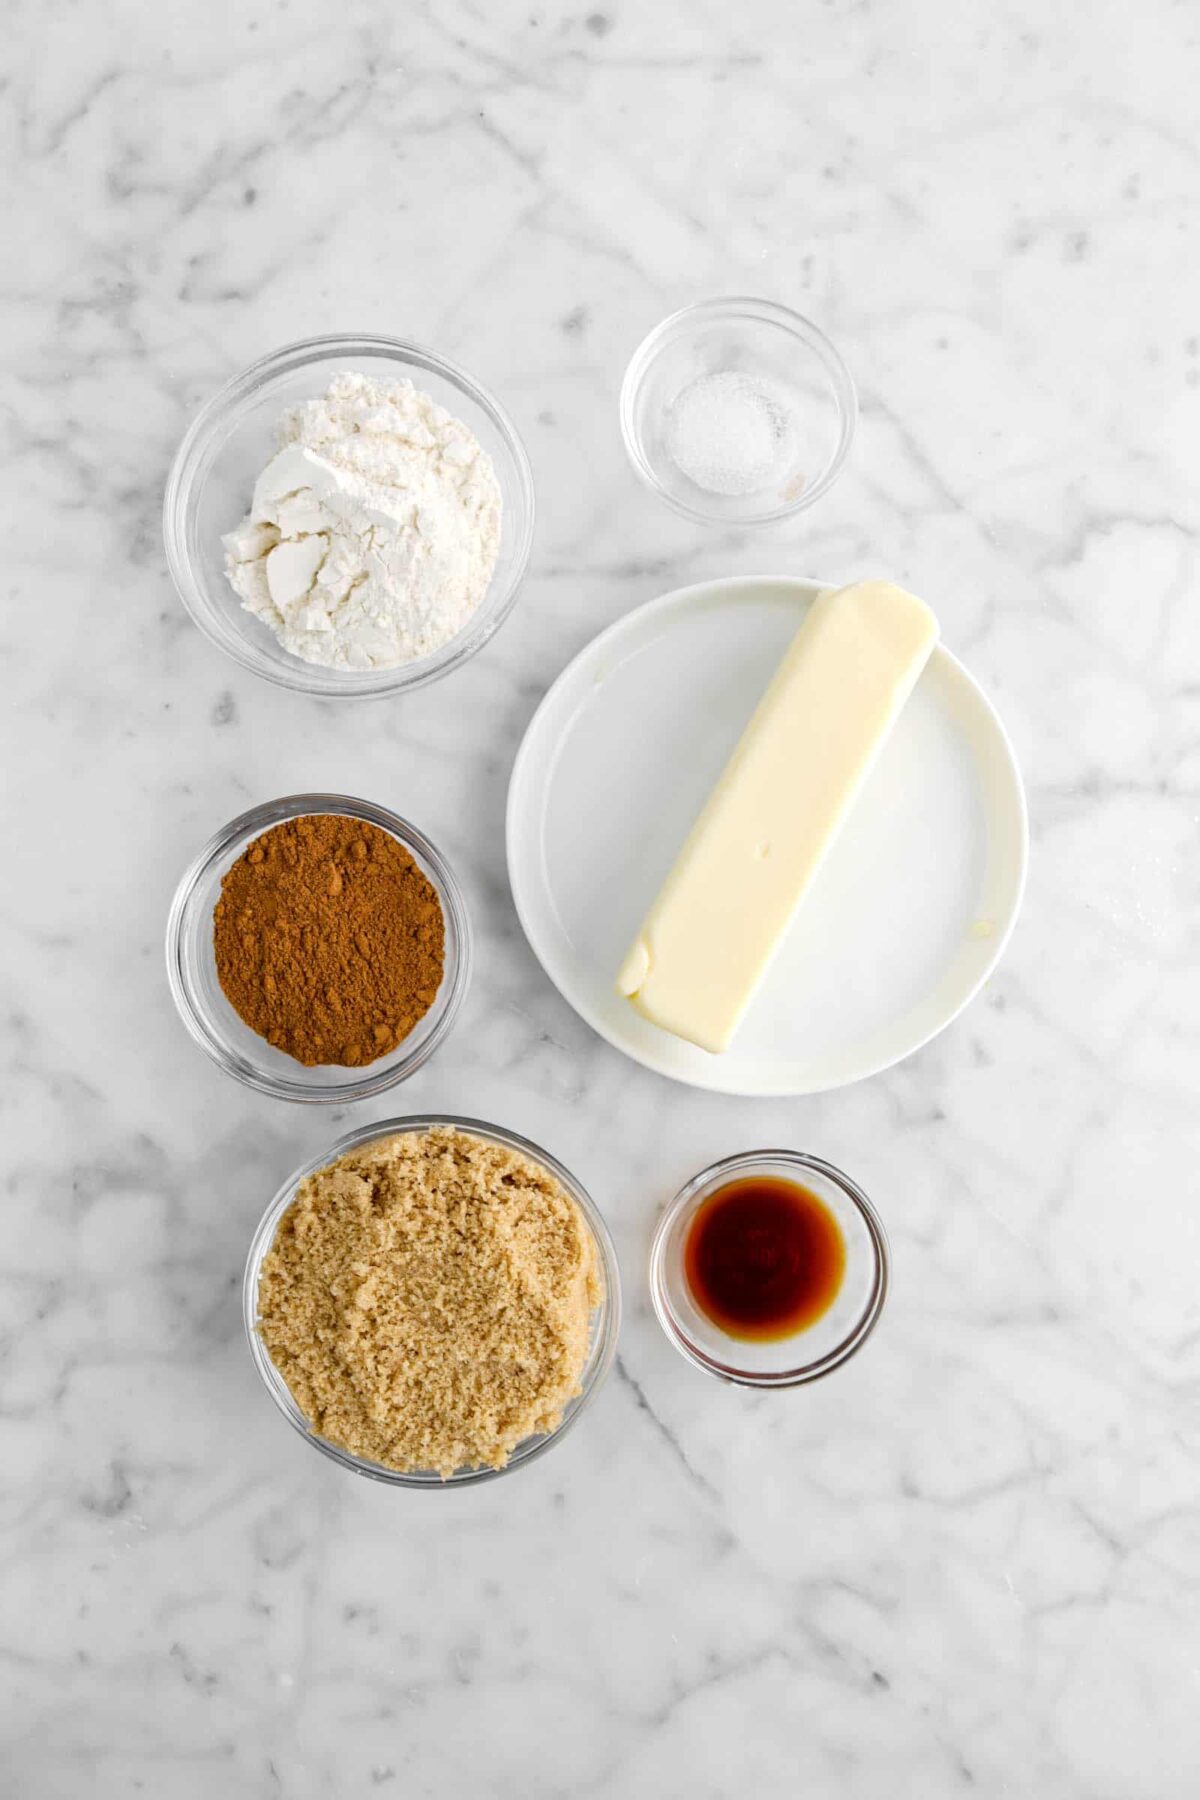 salt, flour, pumpkin pie spice, brown sugar, vanilla, and butter on marble counter